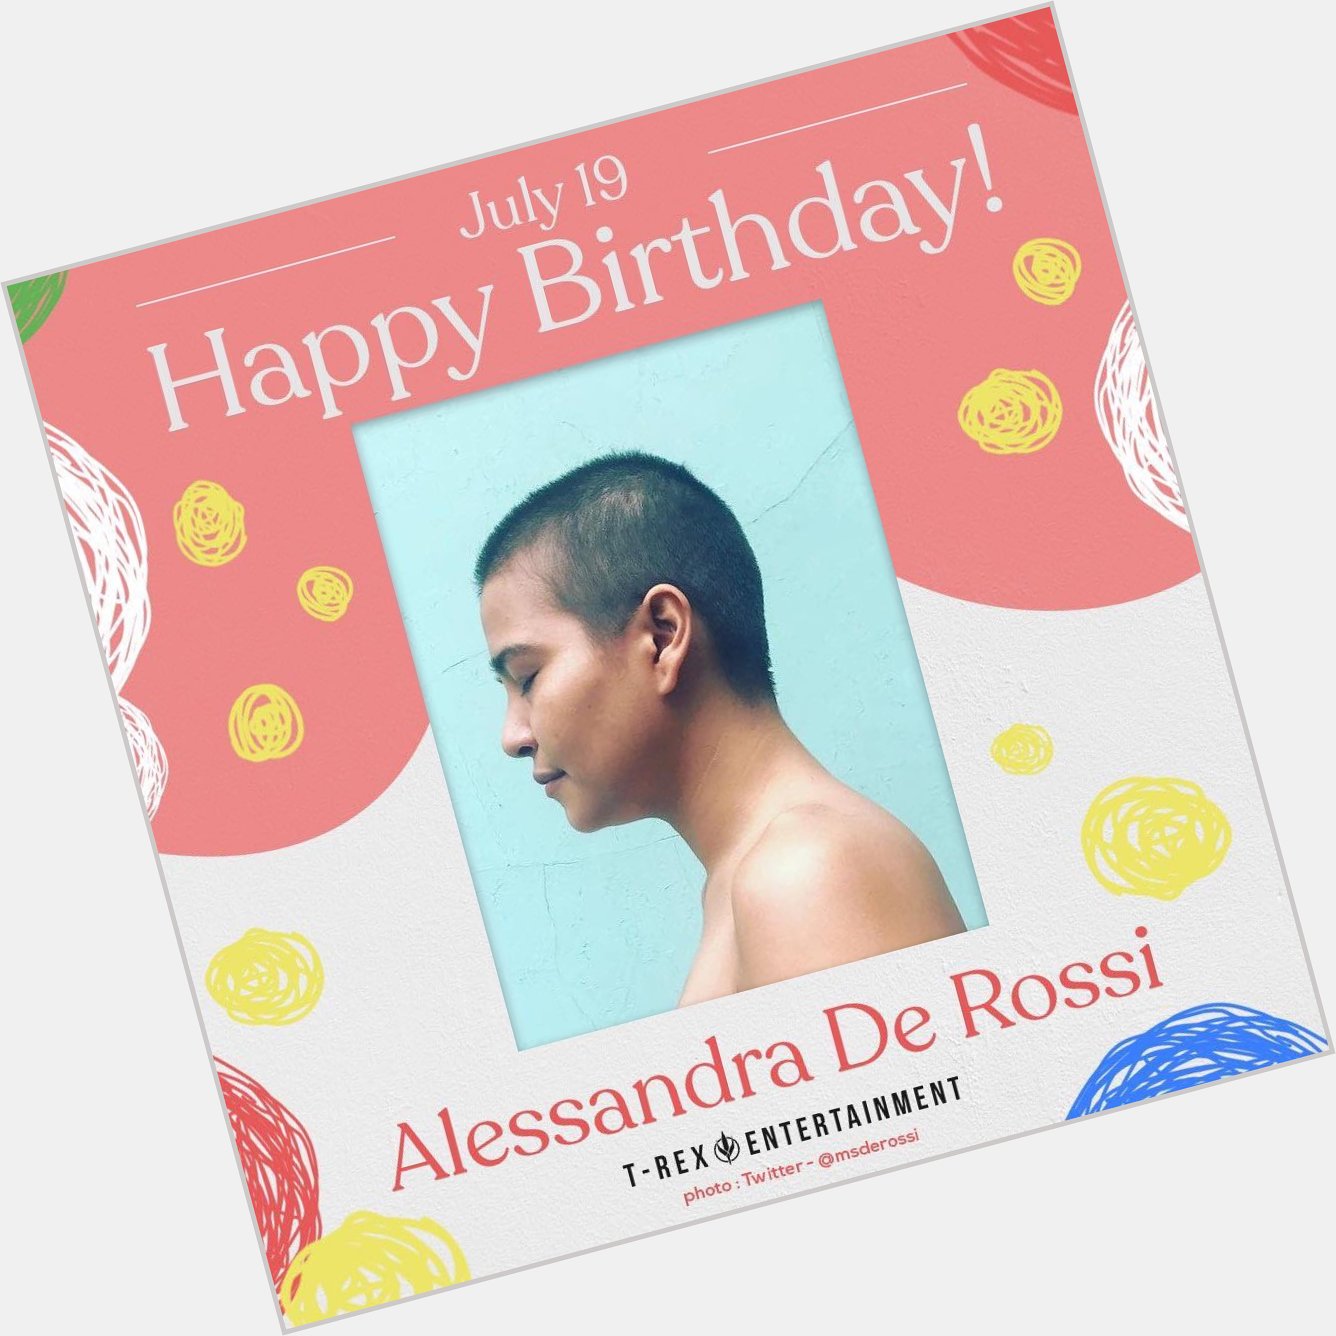 Happy birthday to you, Alessandra De Rossi! 